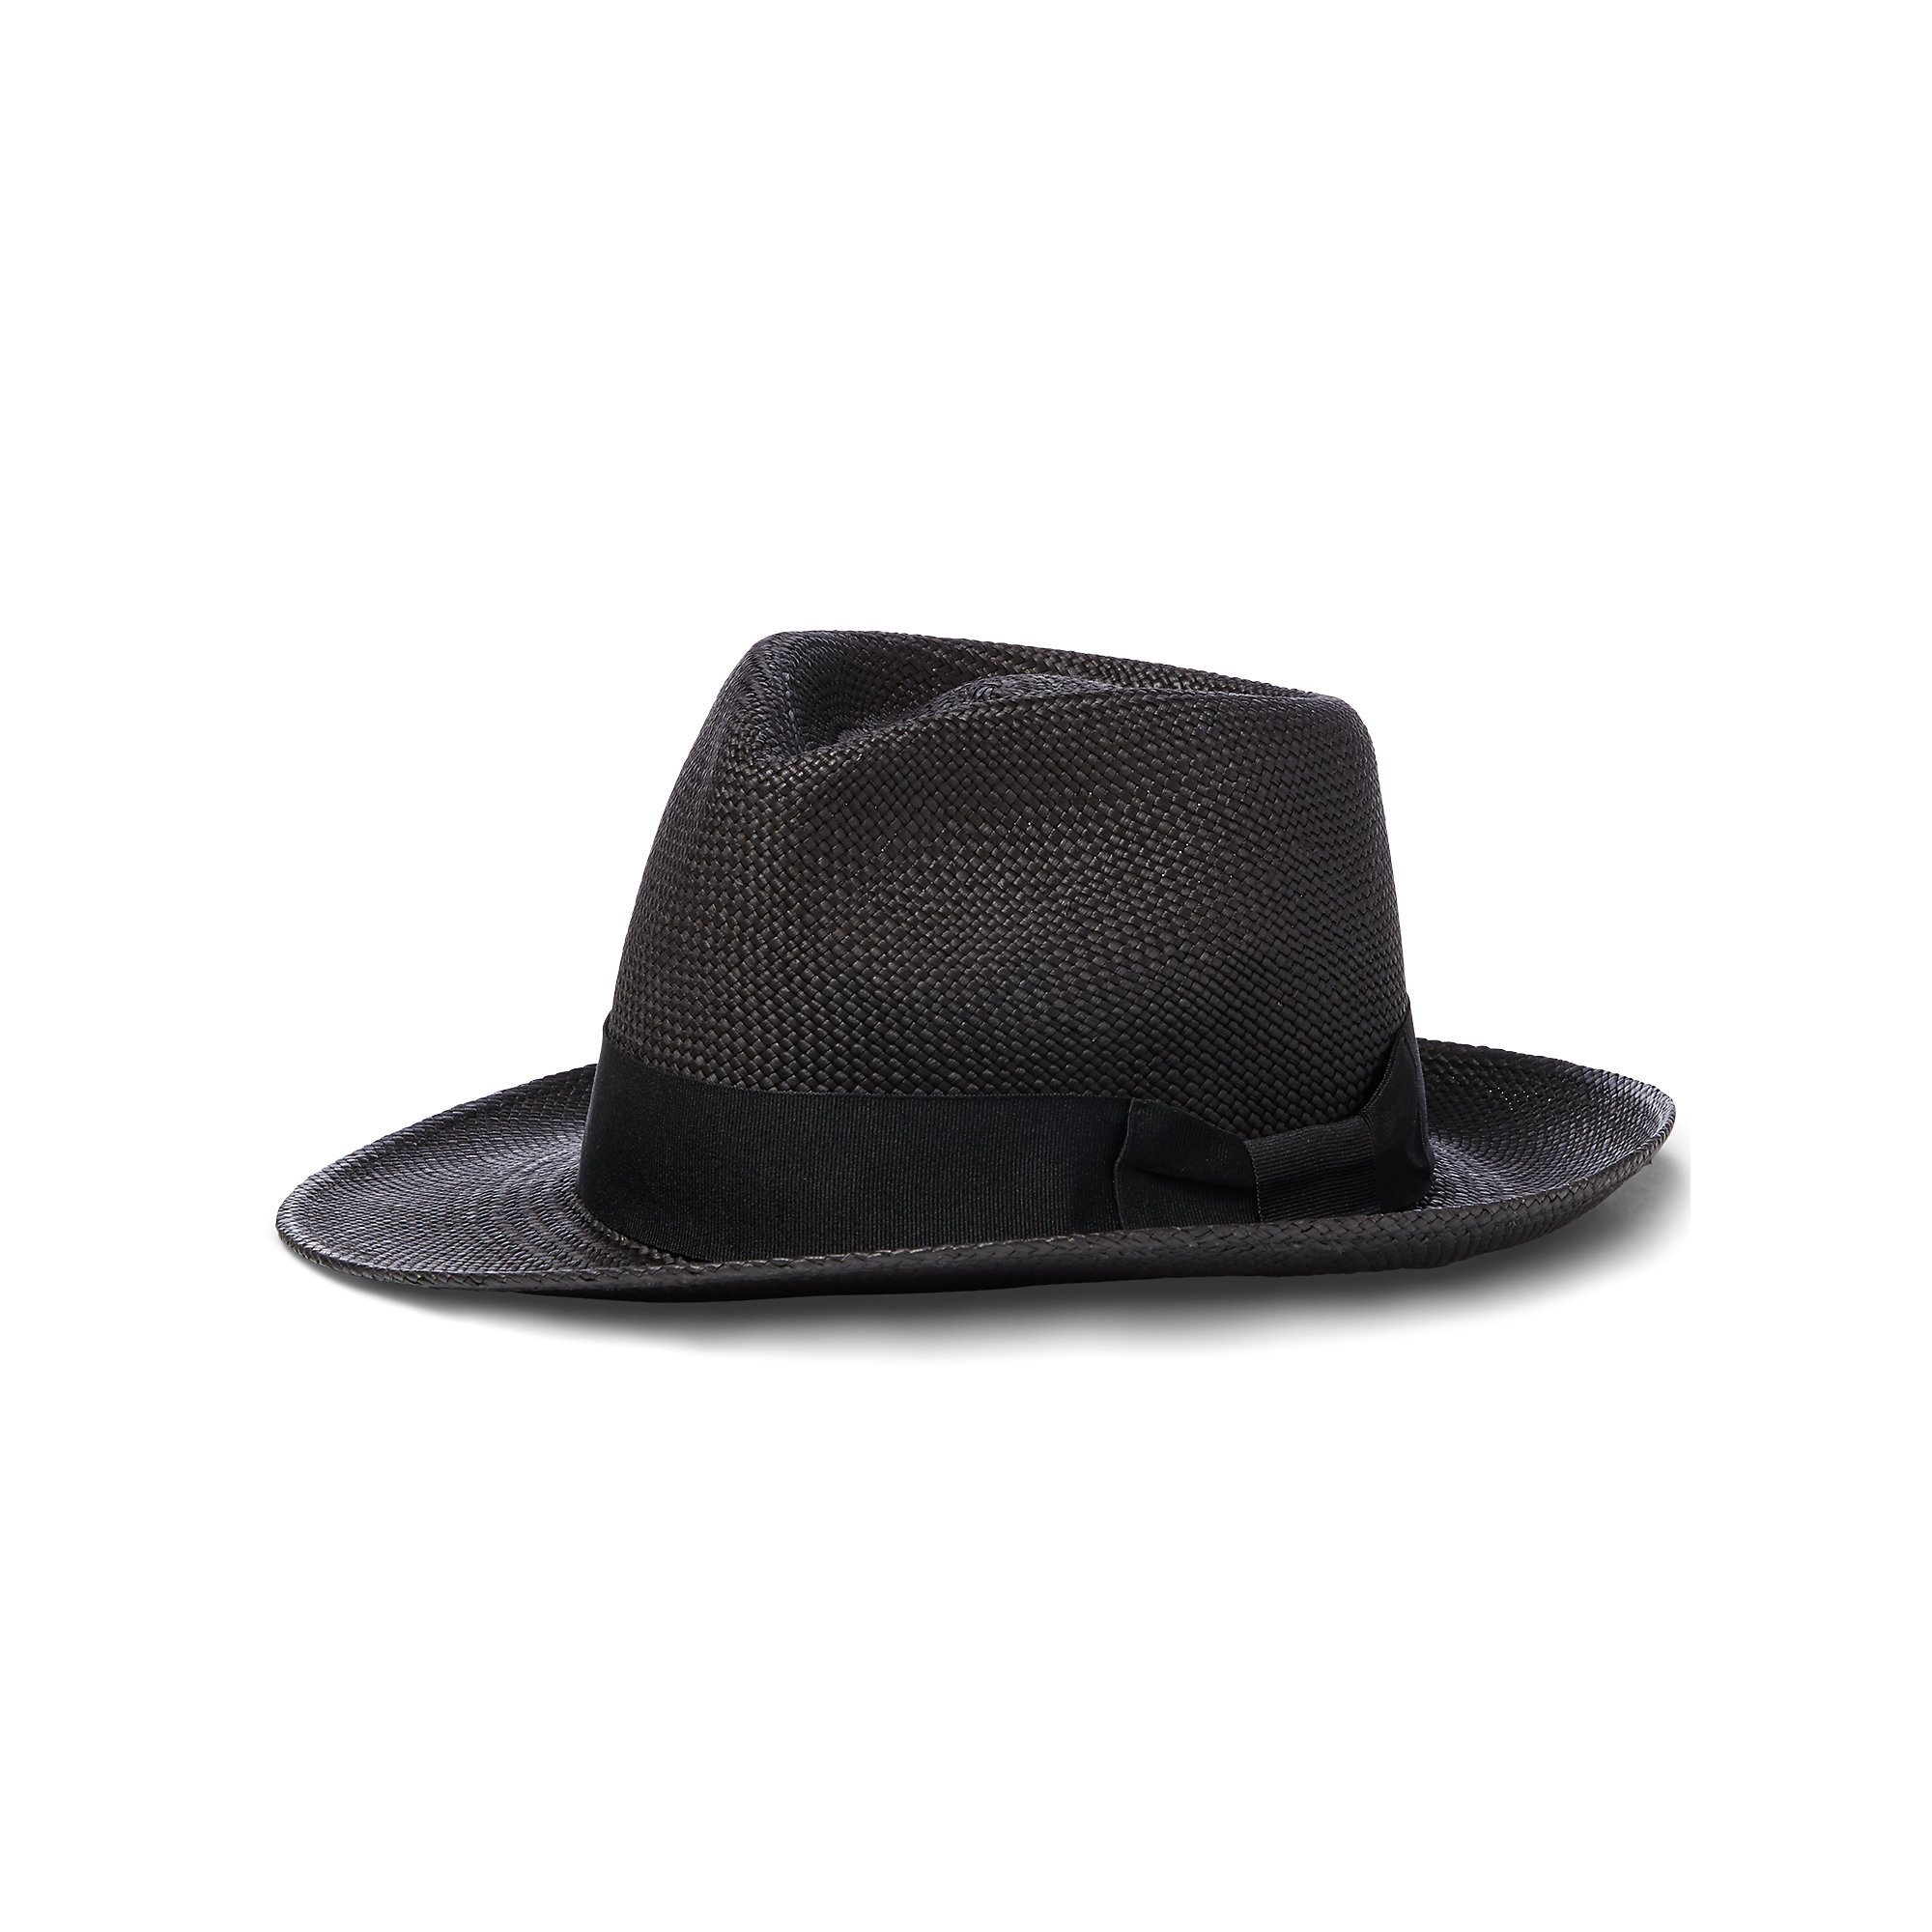 Ralph Lauren Synthetic Straw Panama Hat in Cream/Black (Natural) for Men - Lyst